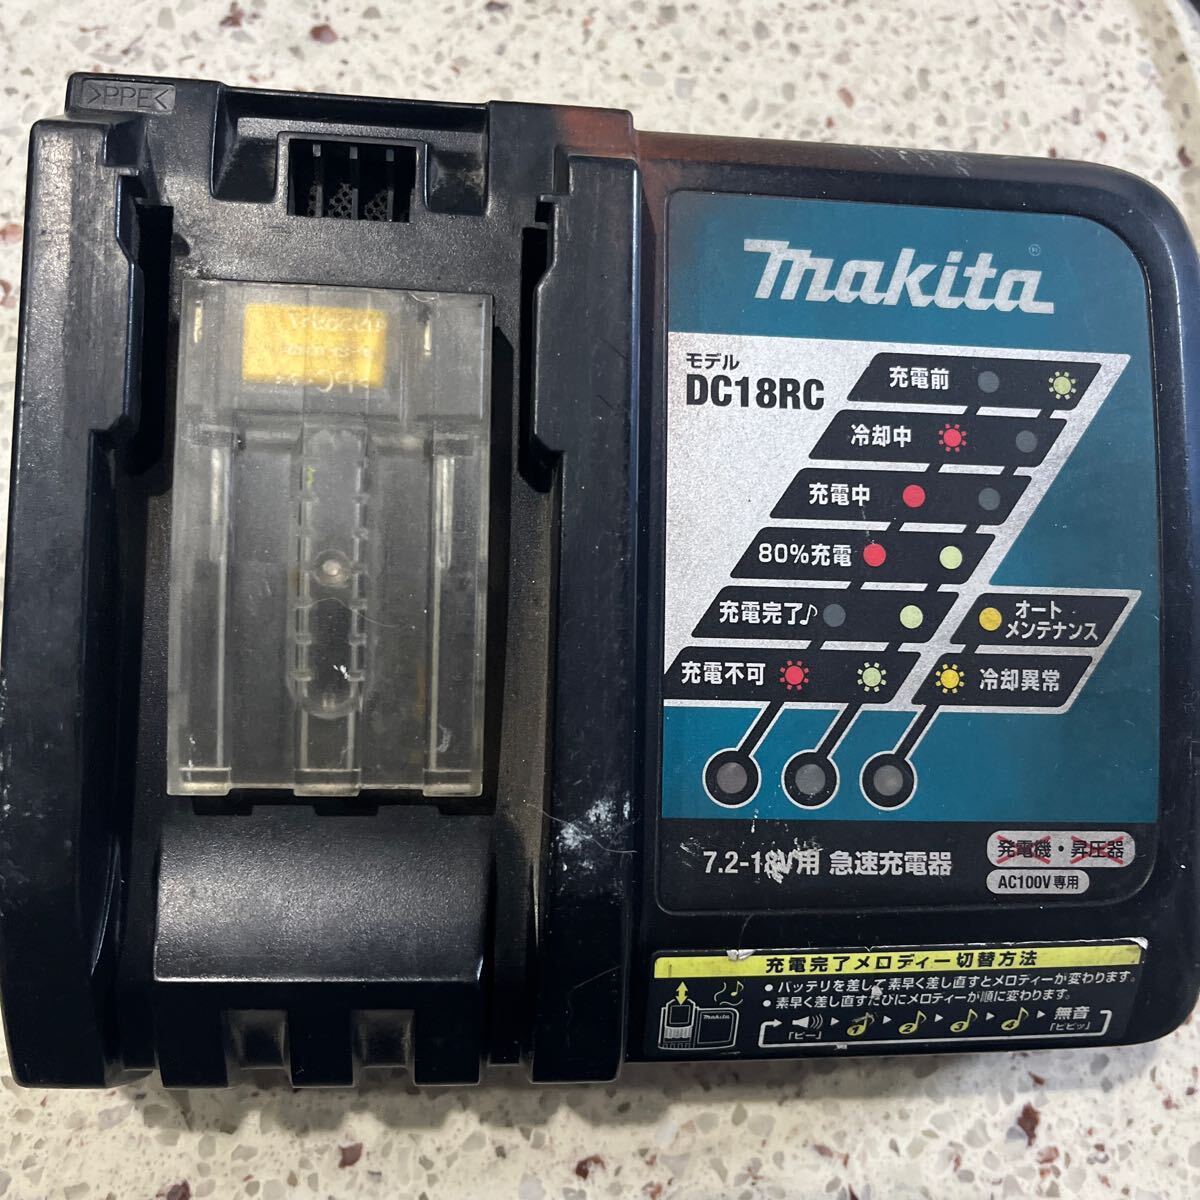 DC18RC マキタ 急速充電器 makita 7.2V-18V用 動作確認中古赤茶緑塗料リチウムイオン電池パックバッテリー充電器の画像9